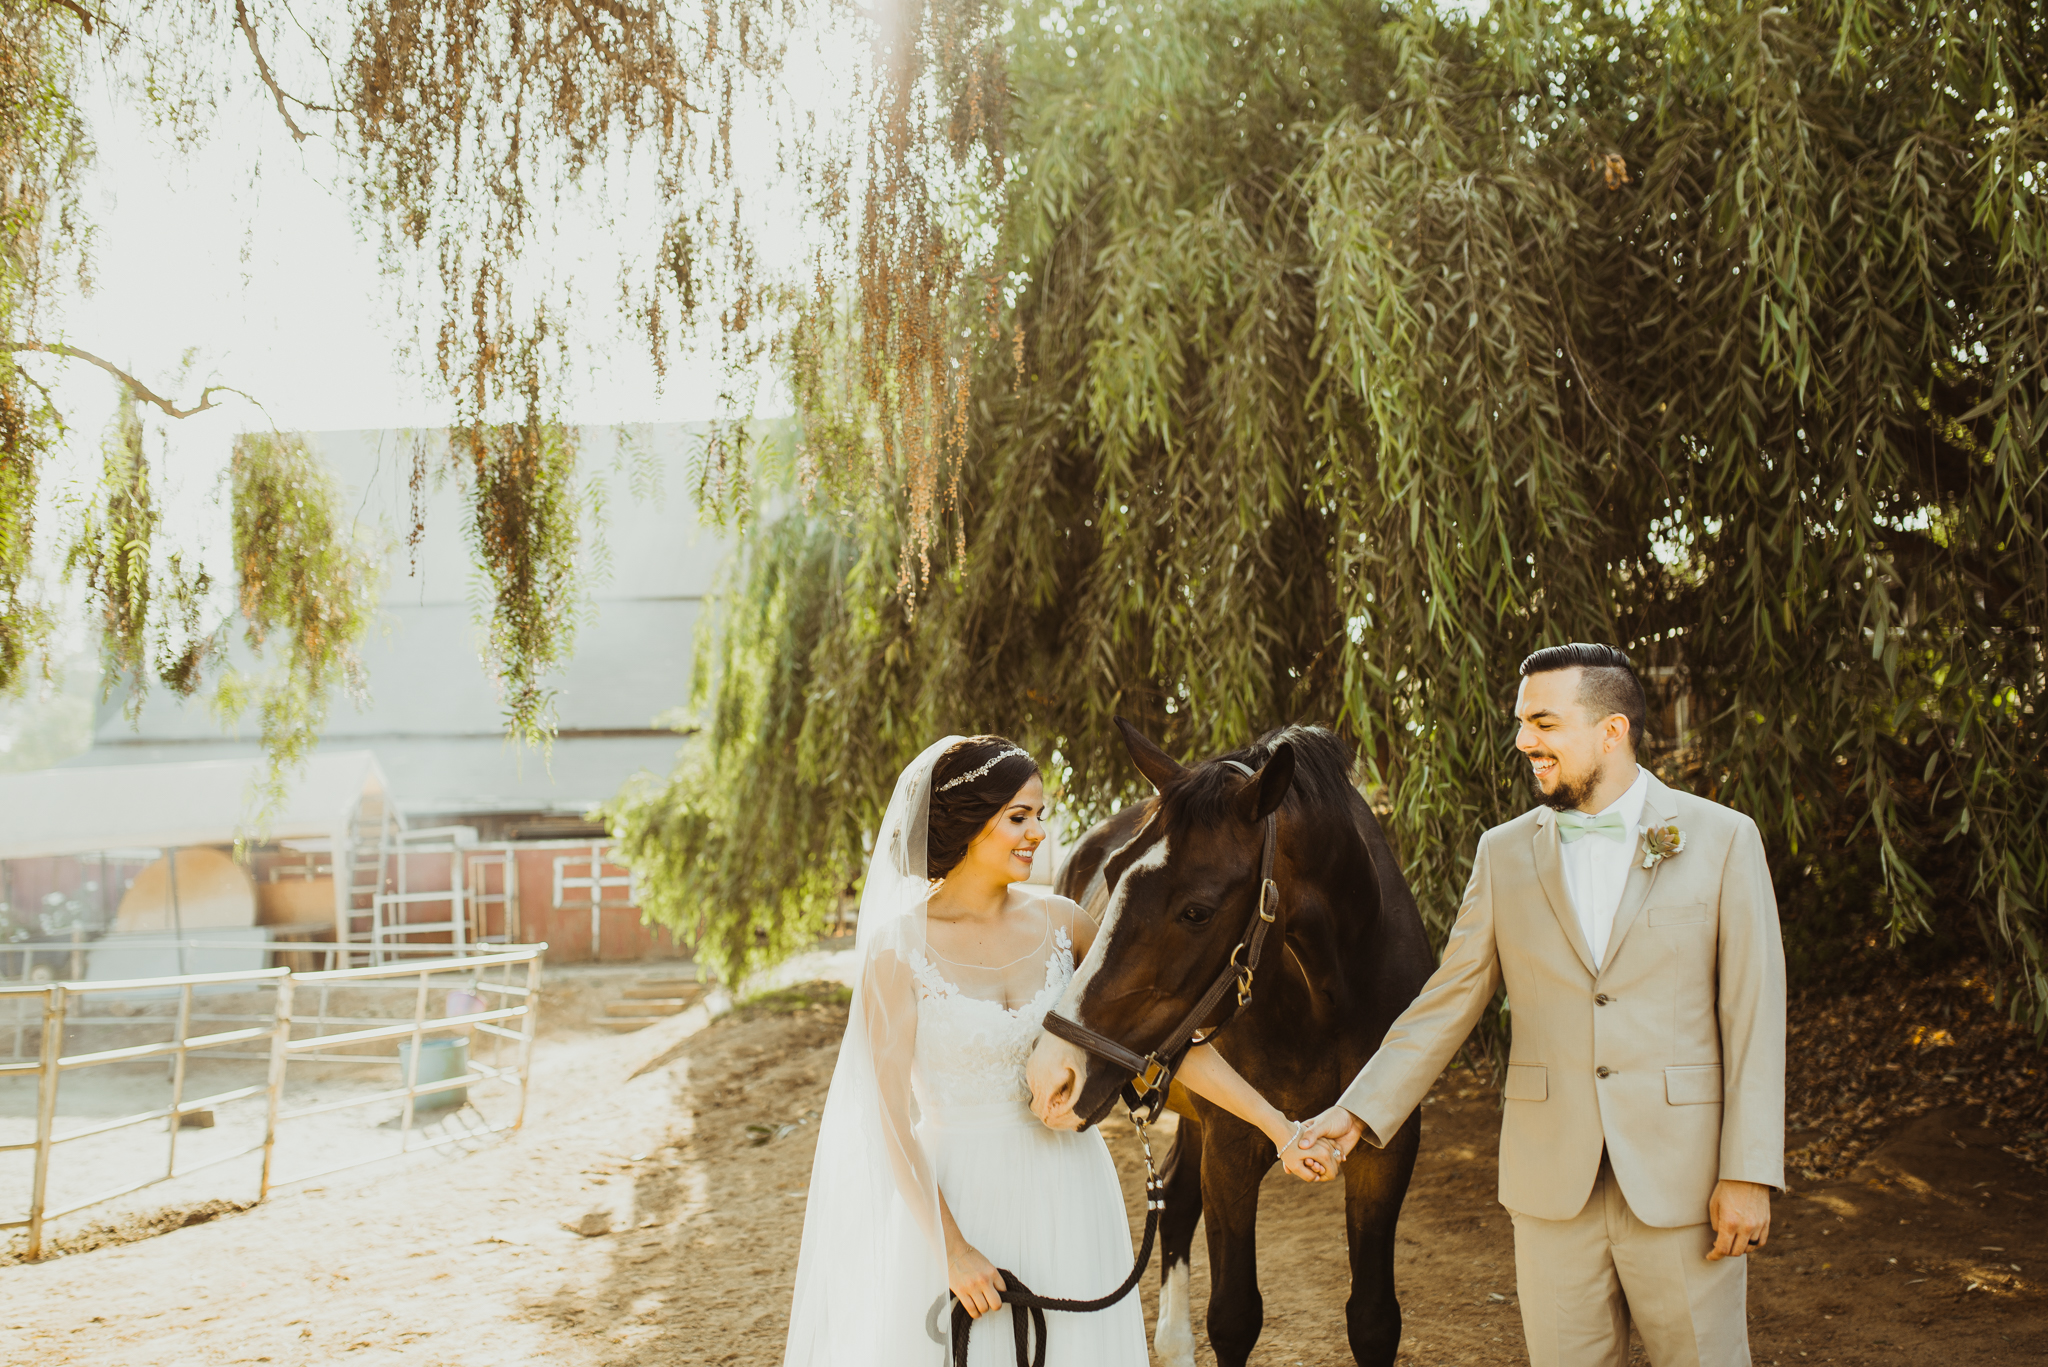 ©Isaiah + Taylor Photography - Brendan + Stefana, Quail Haven Farm Wedding, Vista-113.jpg